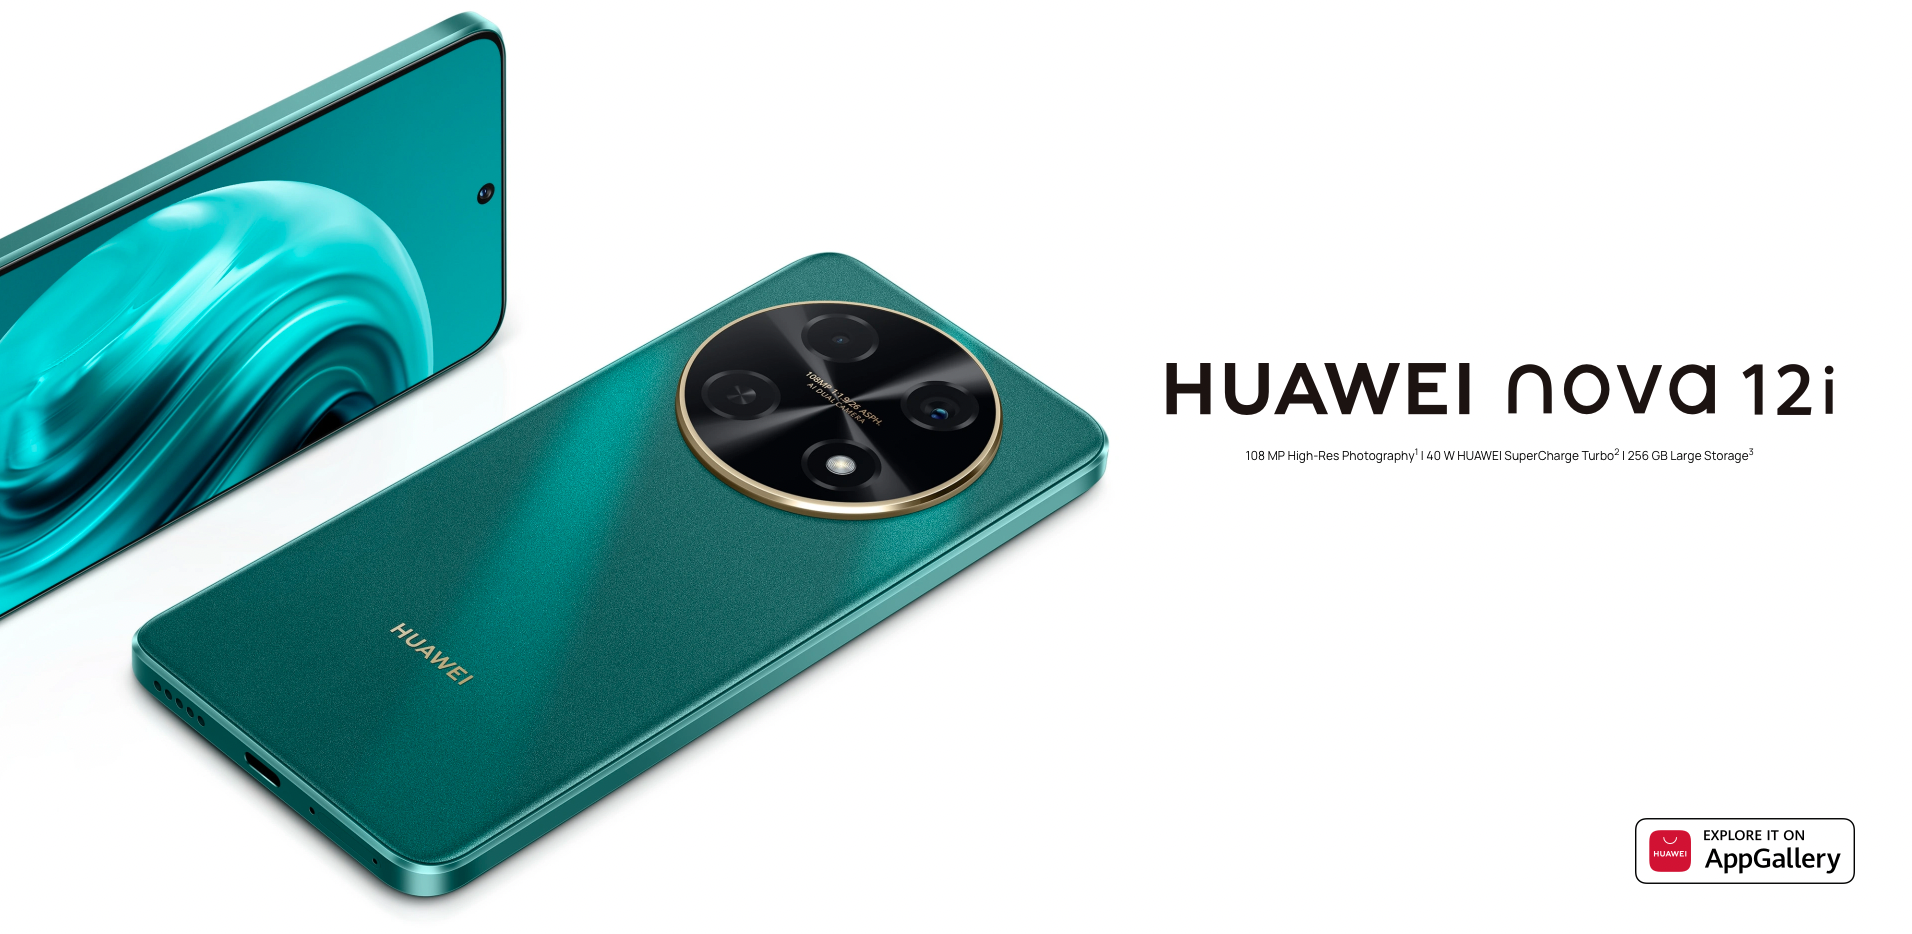 Huawei Nova 12i: pantalla OLED de 90 Hz, chip Snapdragon 680, cámara de 108 MP y batería de 5000 mAh con carga de 40W.